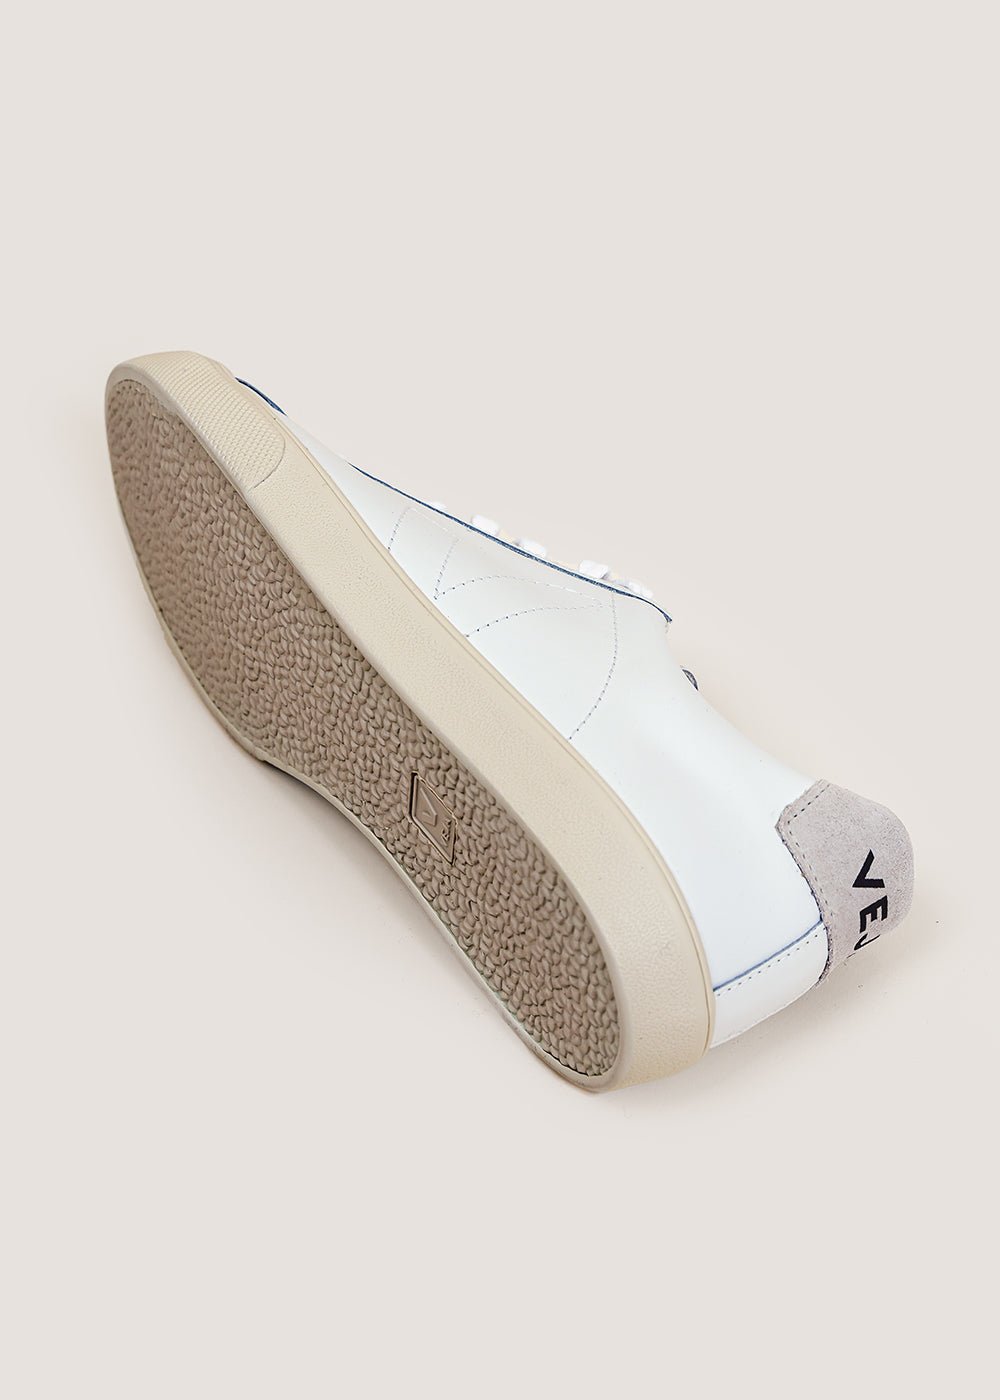 Veja White Esplar Sneakers - New Classics Studios Sustainable Ethical Fashion Canada